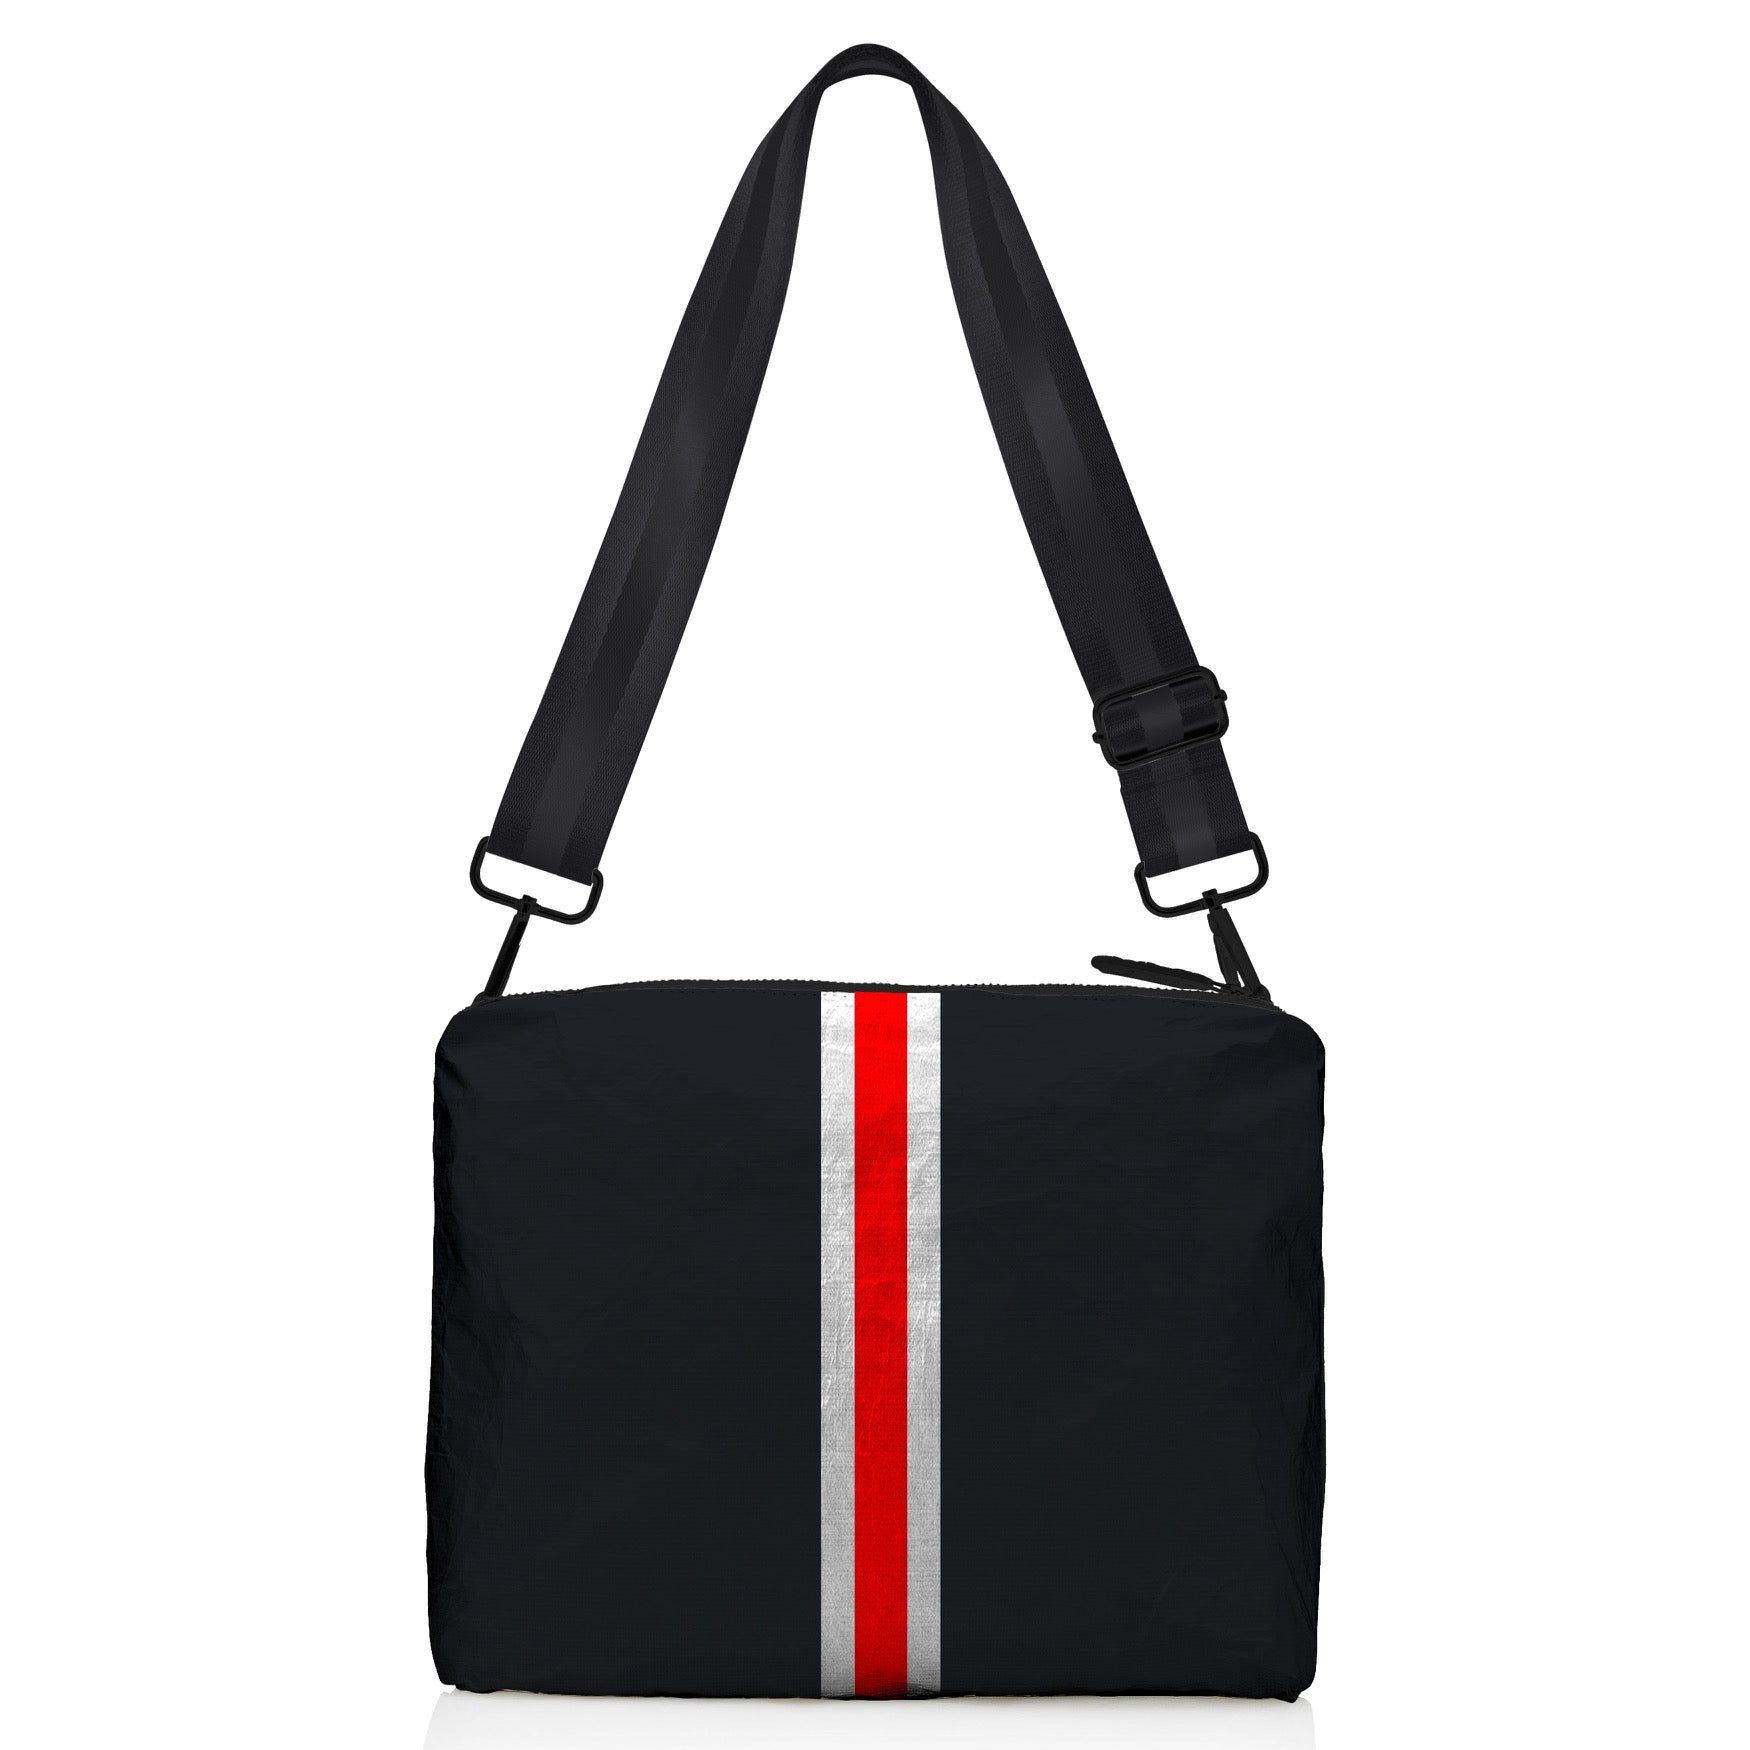 revidere Modtager brud Crossbody/Messenger Purse/Handbag in Black - Red & White Stripes